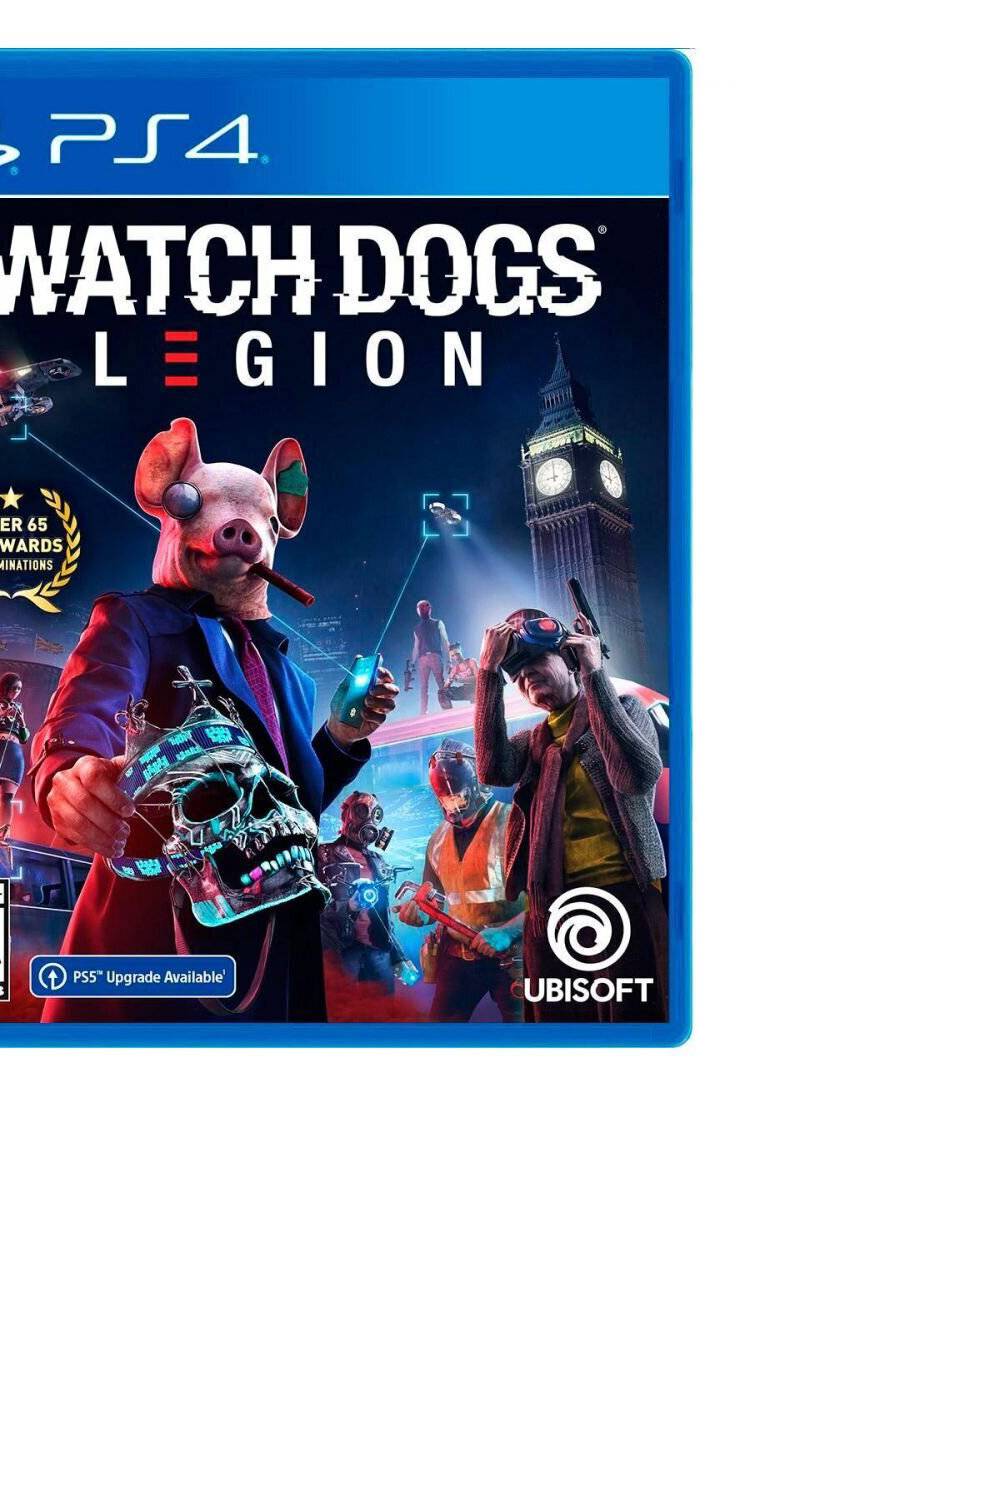 UBISOFT - Watch Dogs Legion - Ps5